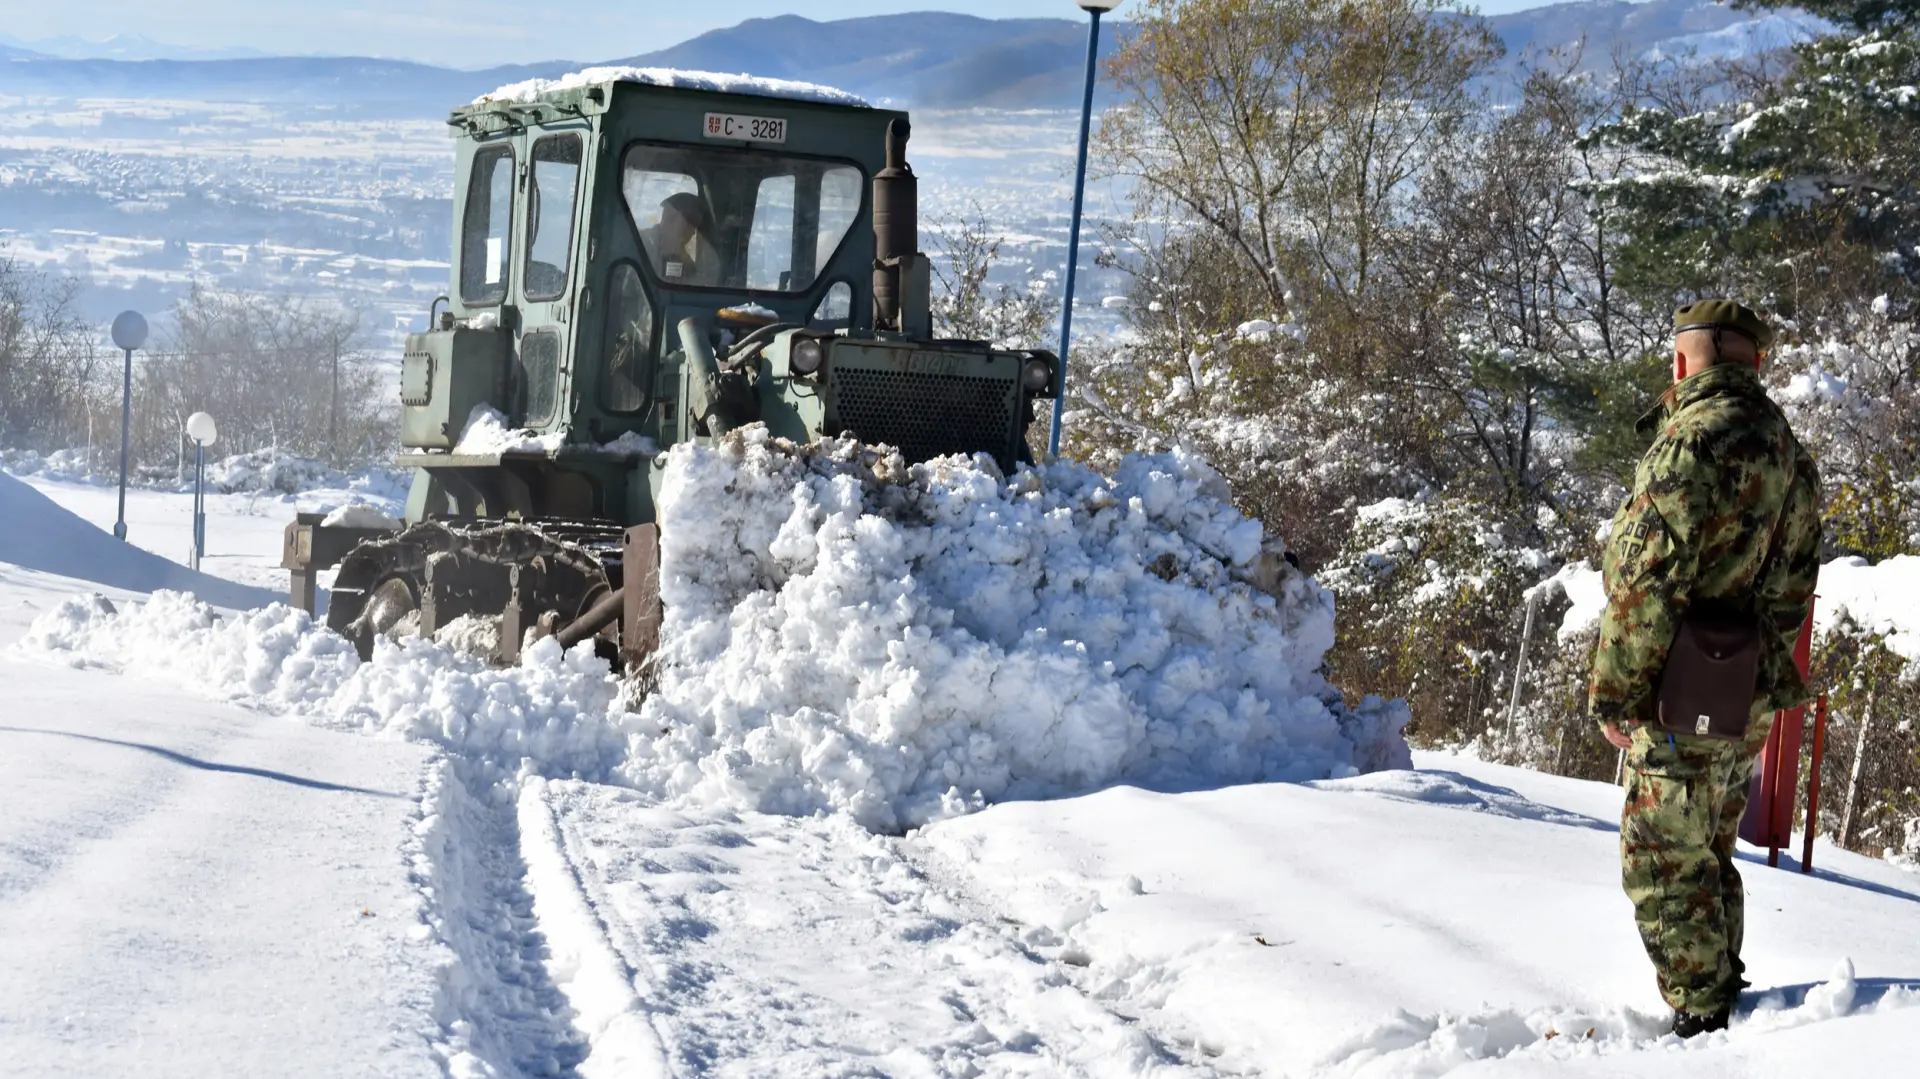 vojska srbije, sneg, mećava, snežni nanosi, čišćenje snega - foto Ministarstvo odbrane Republike Srbije 3-6564bbd9abde1.webp